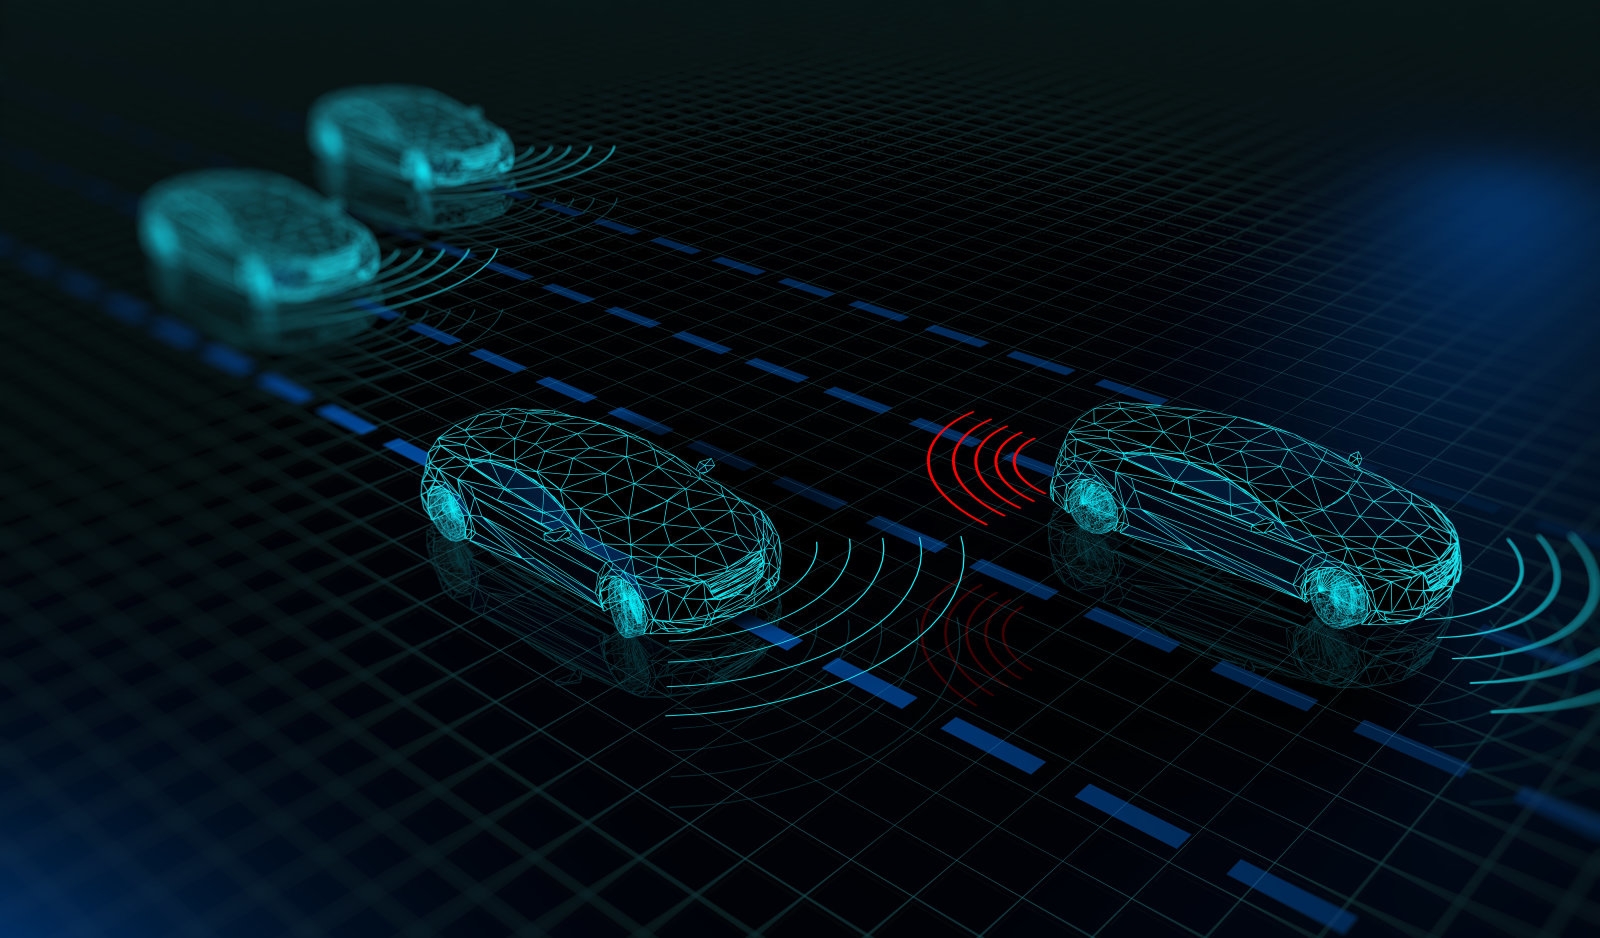 Apple AI chief reveals more progress on self-driving car tech | DeviceDaily.com